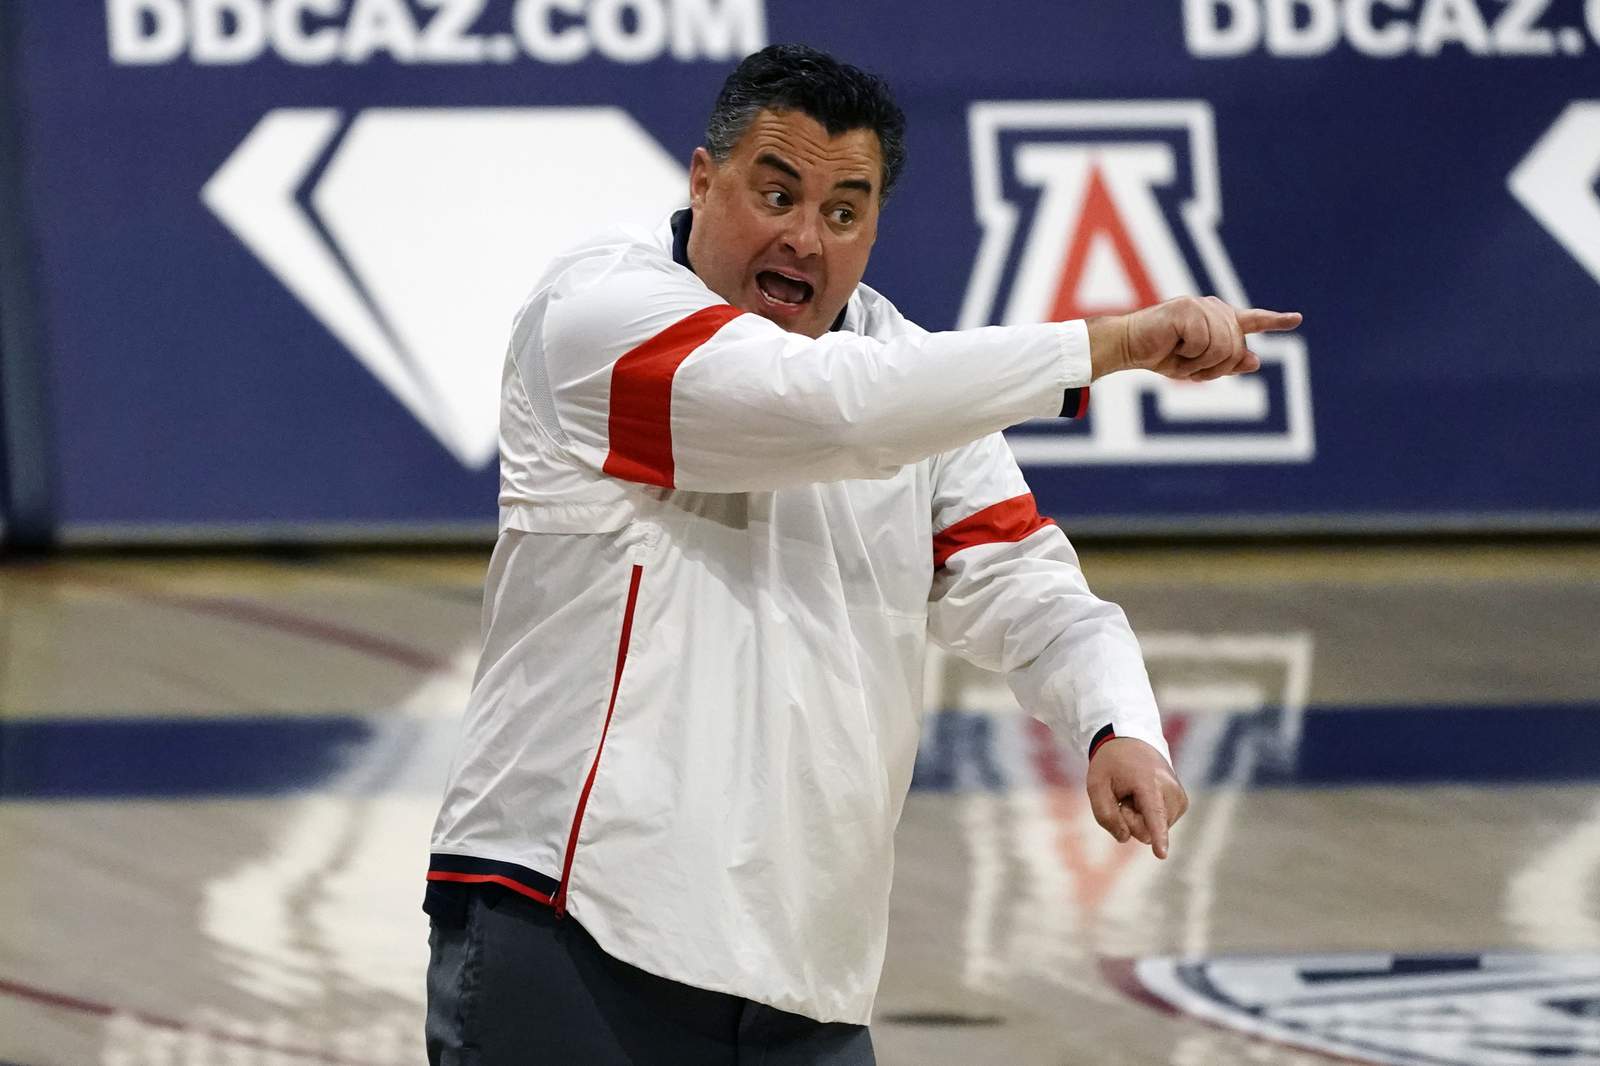 Arizona men's basketball self-imposes 1-year postseason ban